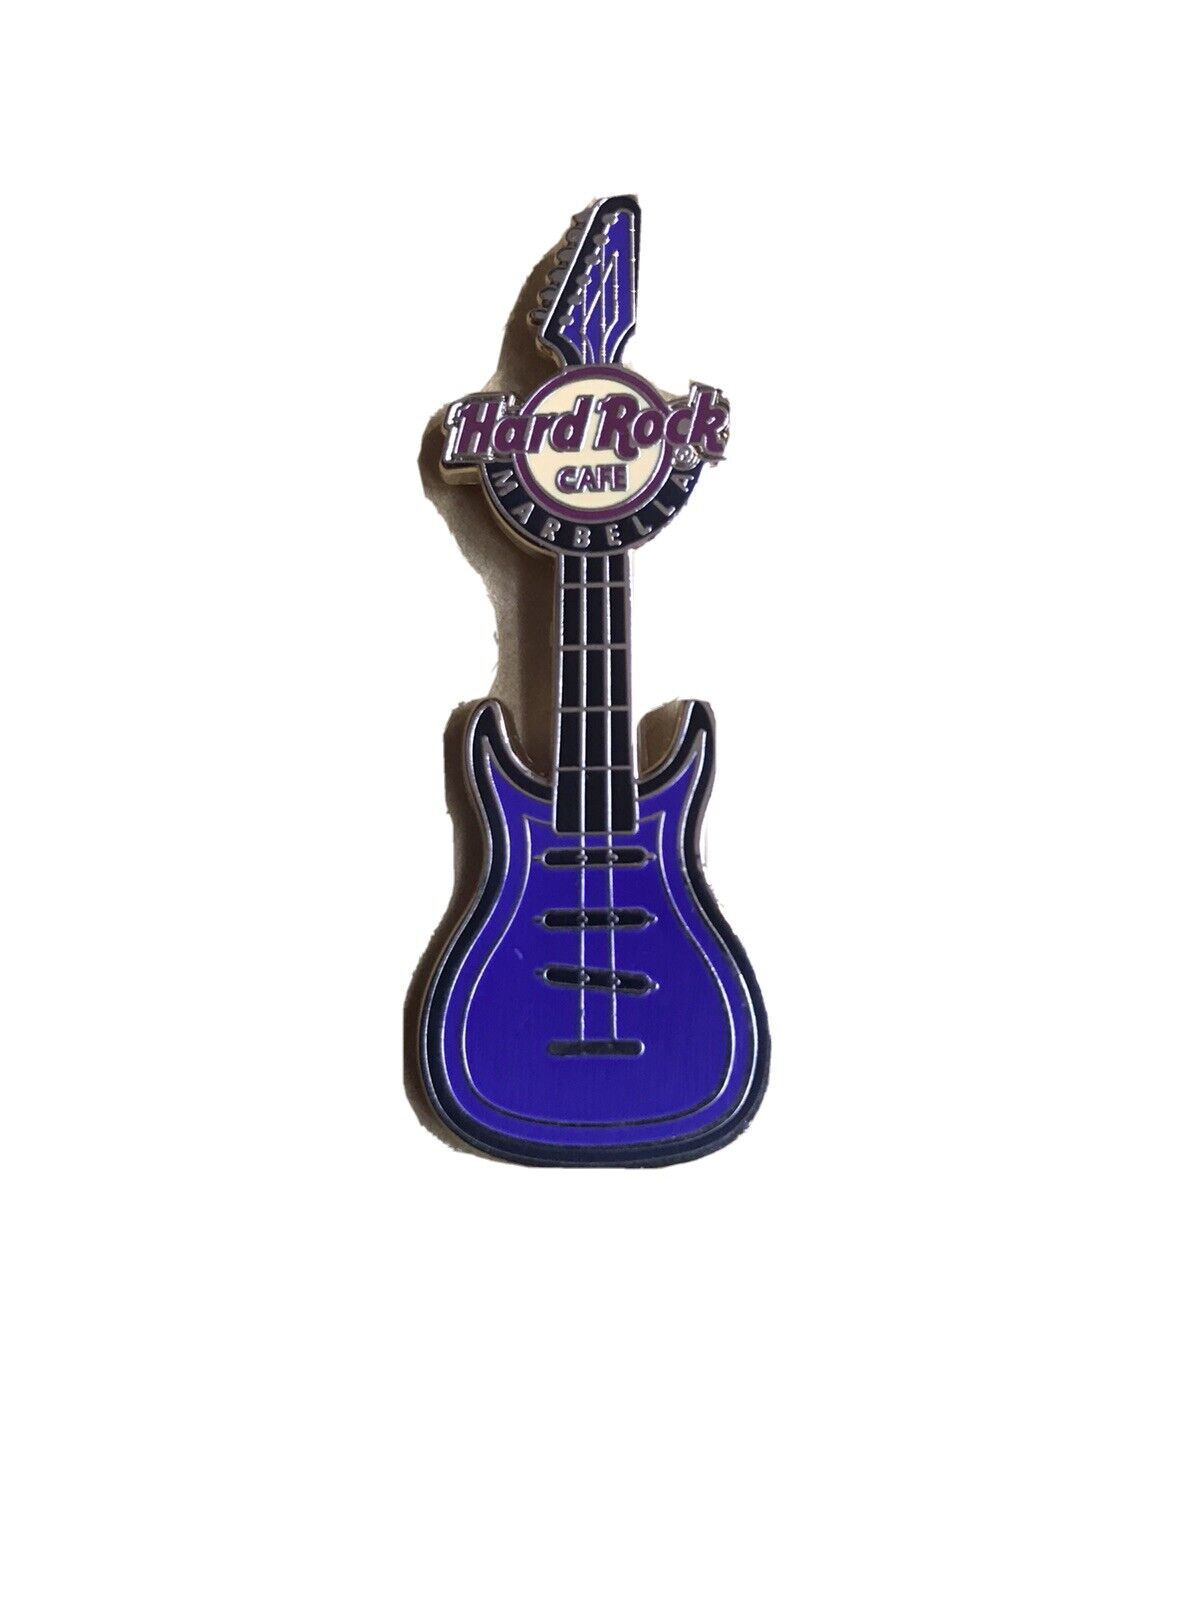 Hard Rock Cafe Marbella Guitar Pin